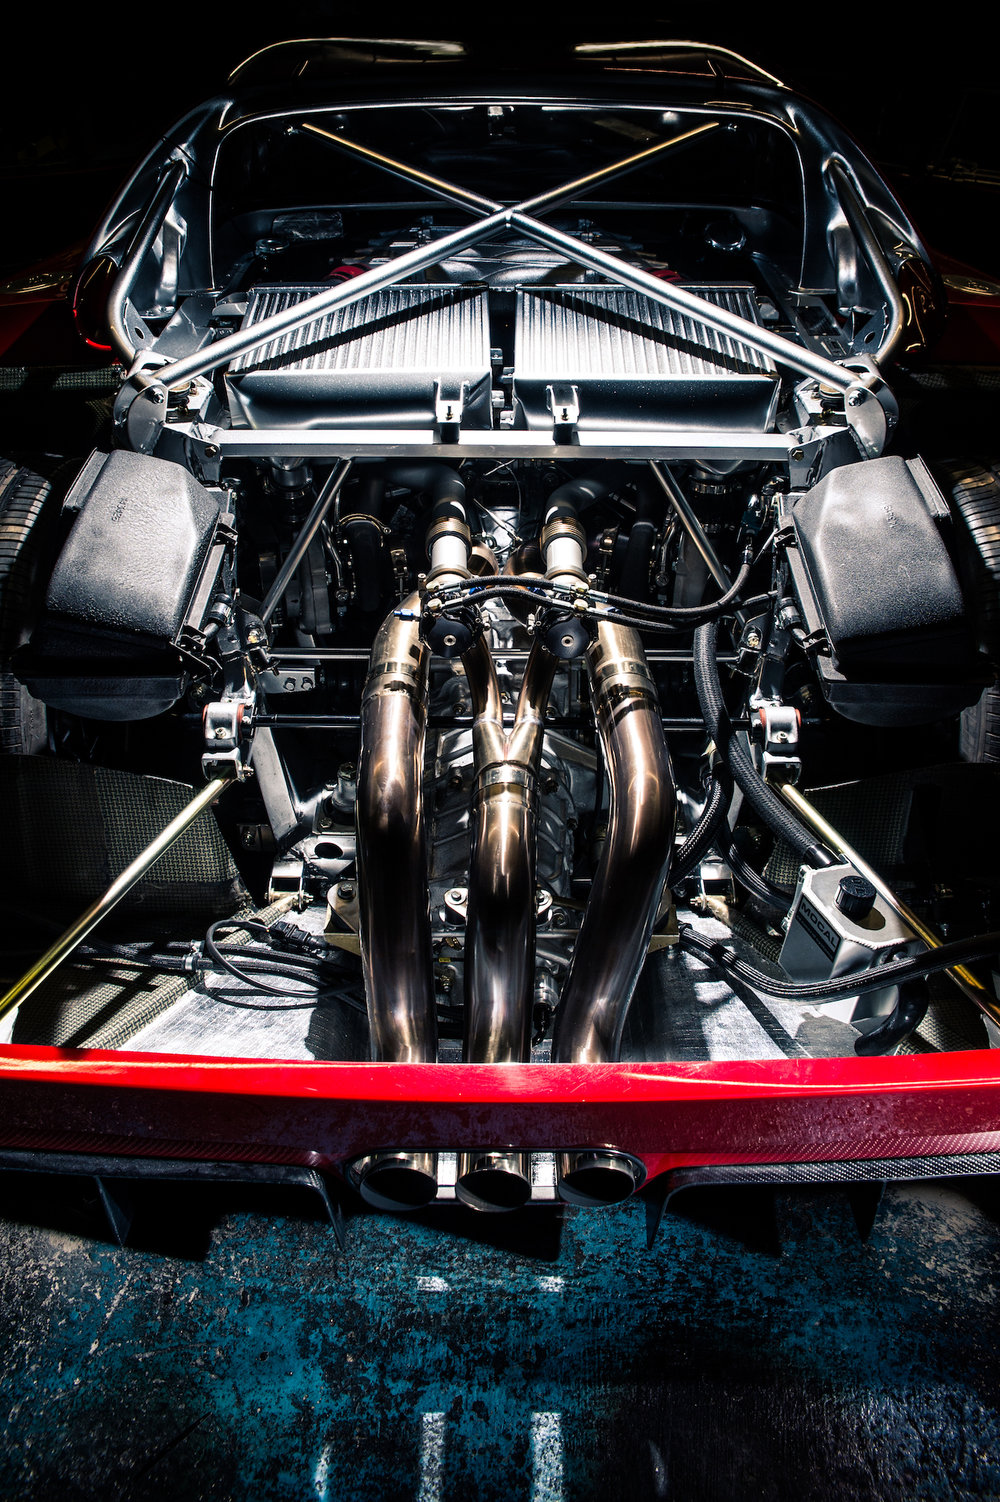 Ferrari Engine Re Builds, Electrical Diagnostics, Lamborghini and Maserati,  Surrey, London — Moto Technique Limited